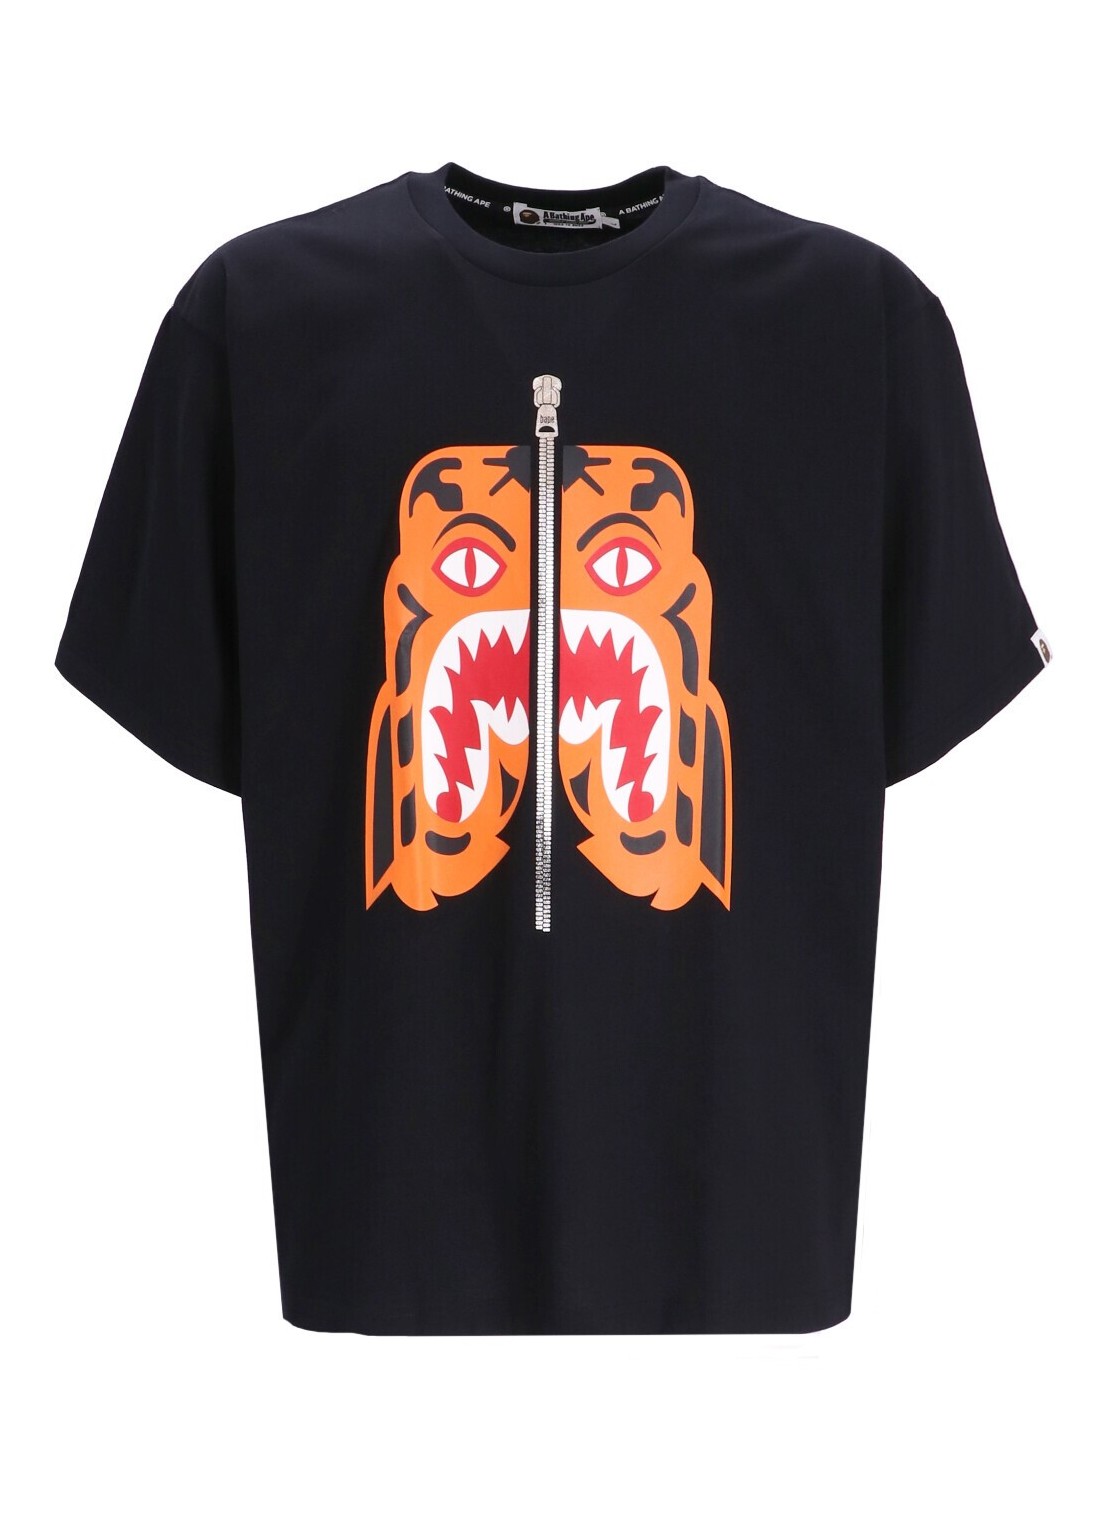 Camiseta bape t-shirt man tiger relaxed fit tee m 001csi801012m black talla negro
 